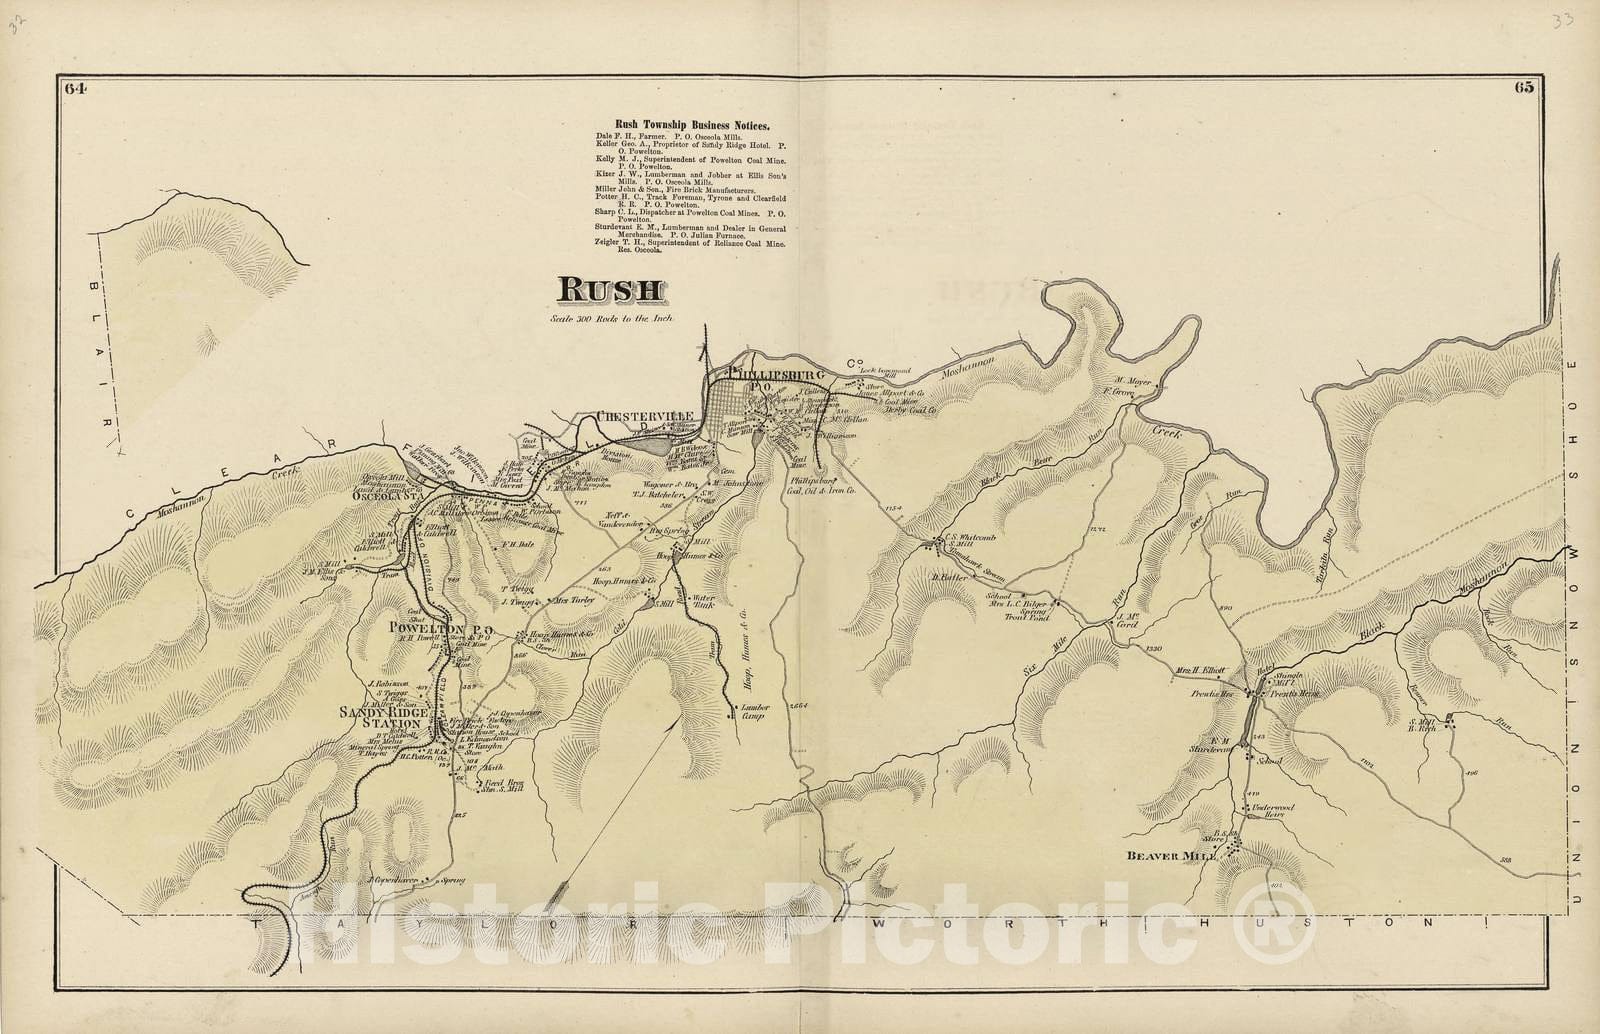 Historic 1874 Map - Atlas of Centre County, Pennsylvania - Rush